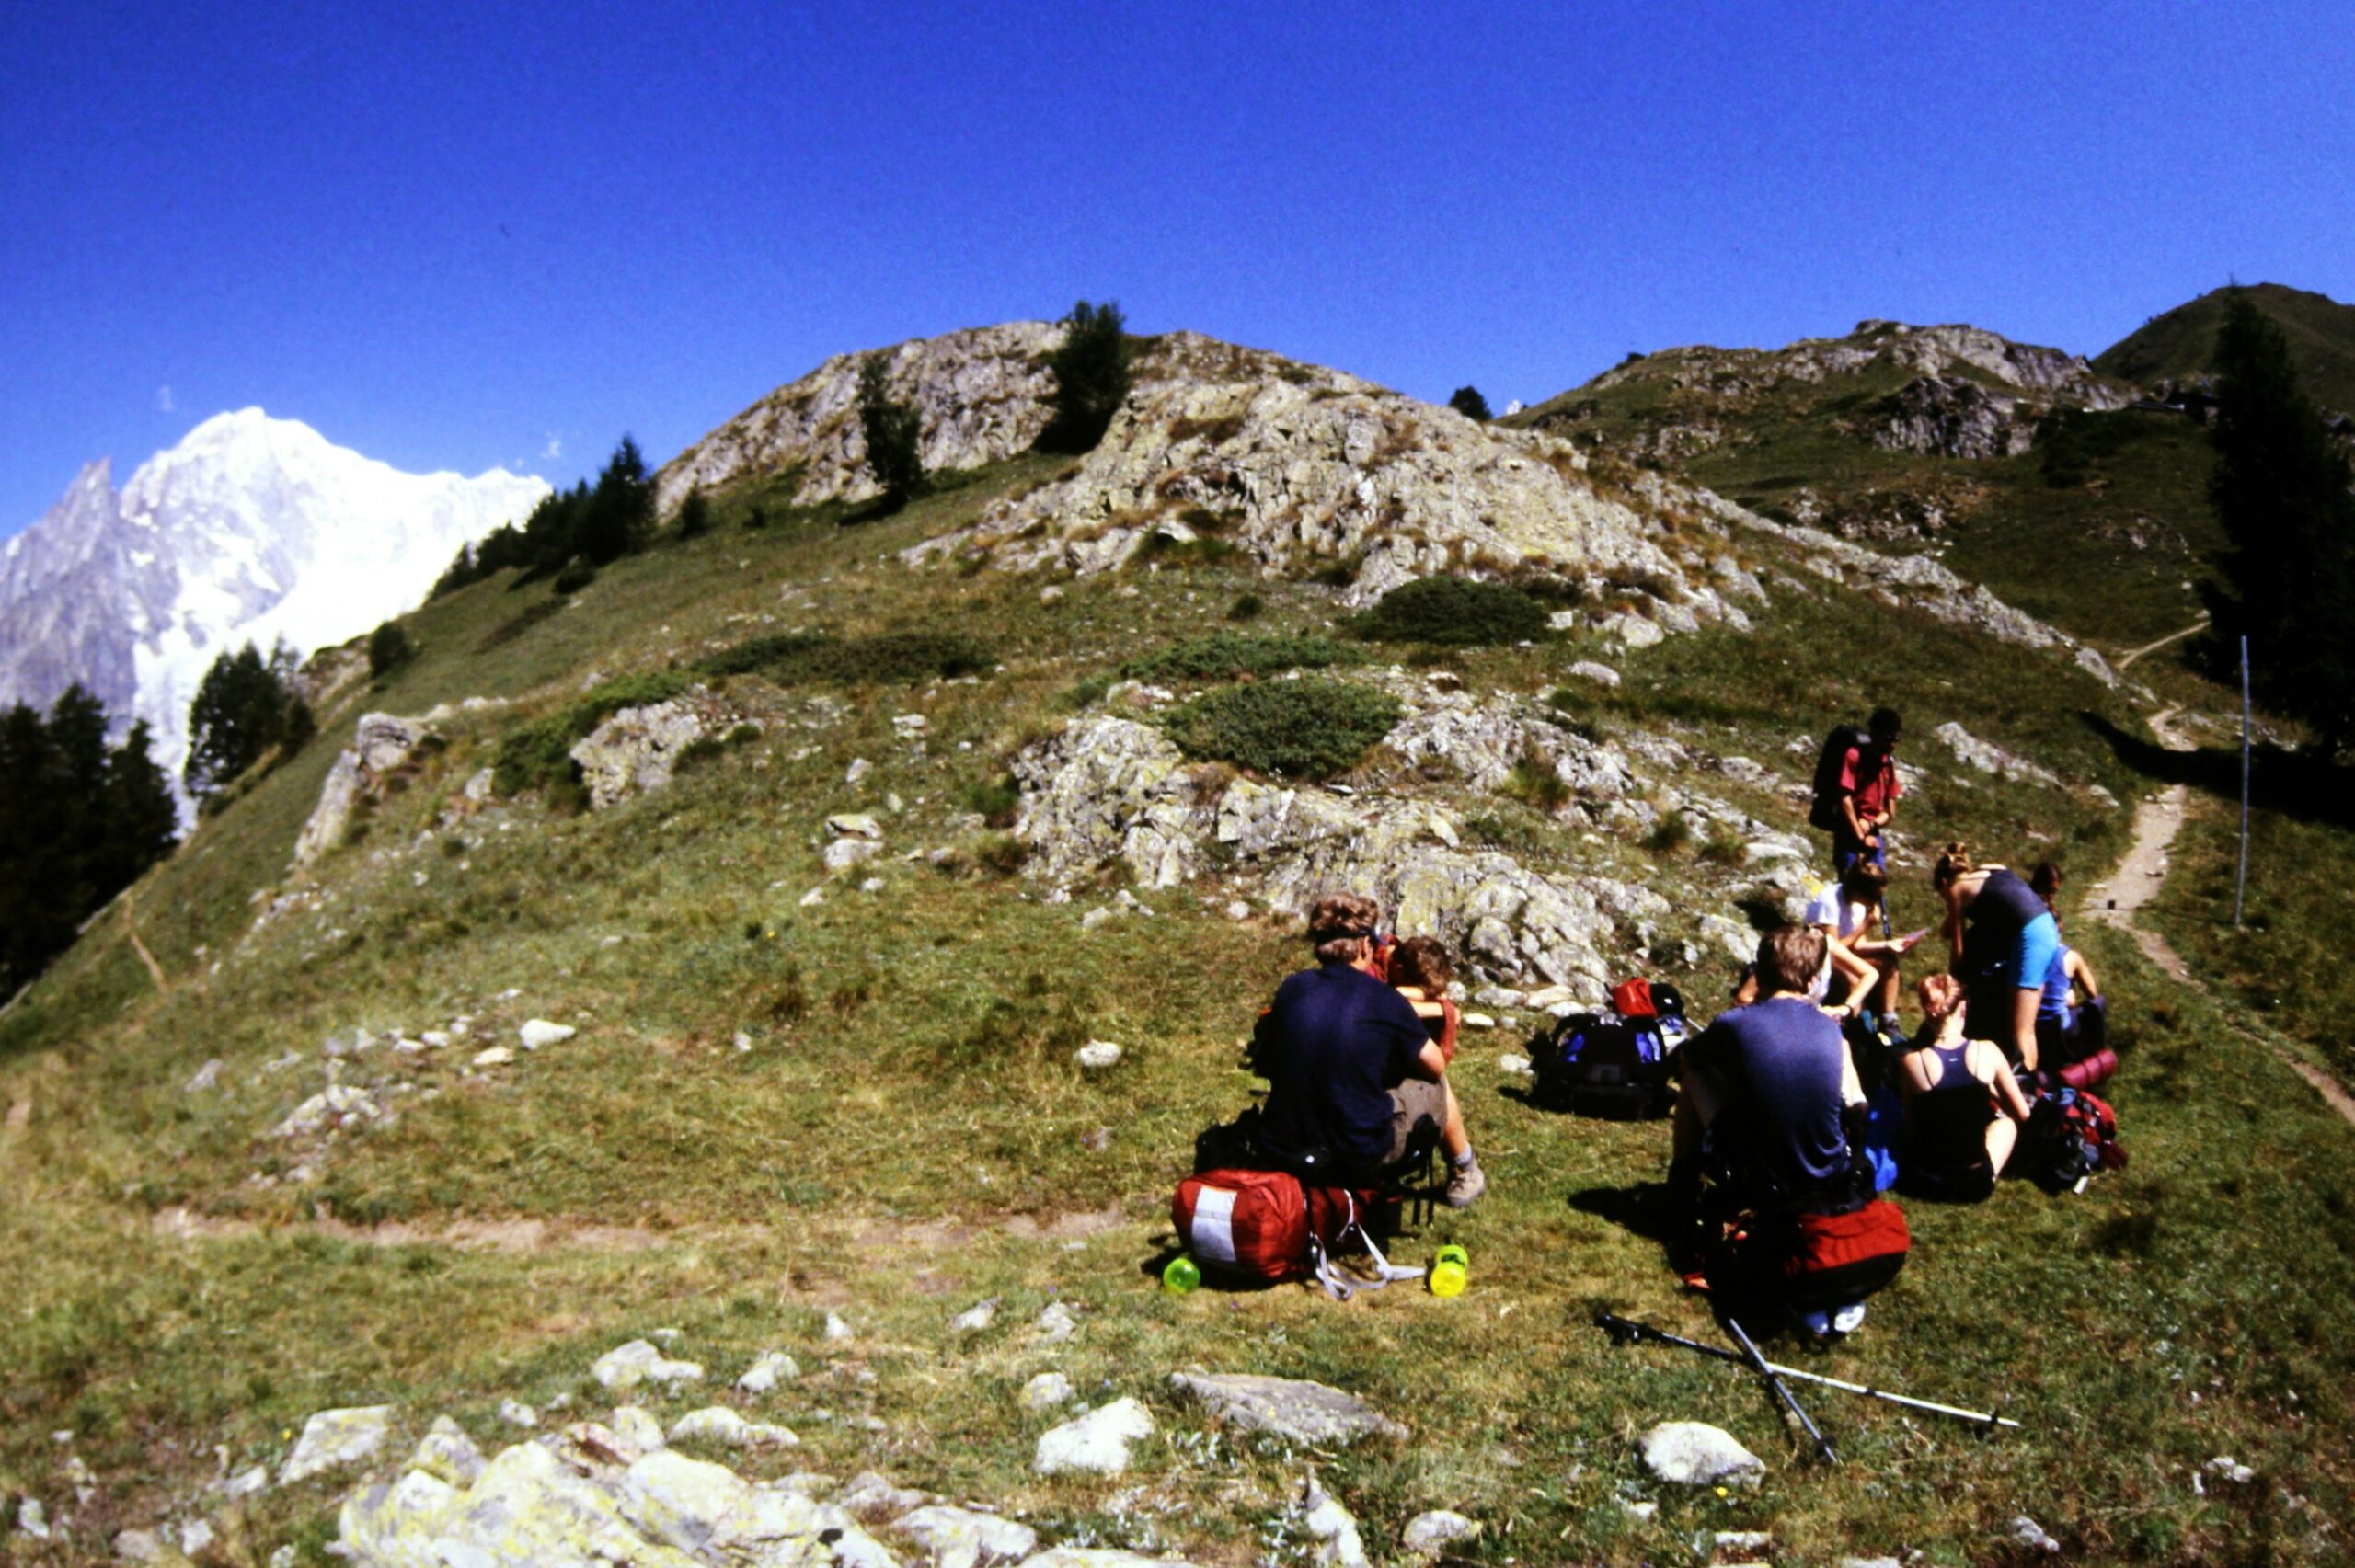 2002 grassy hill hike rest